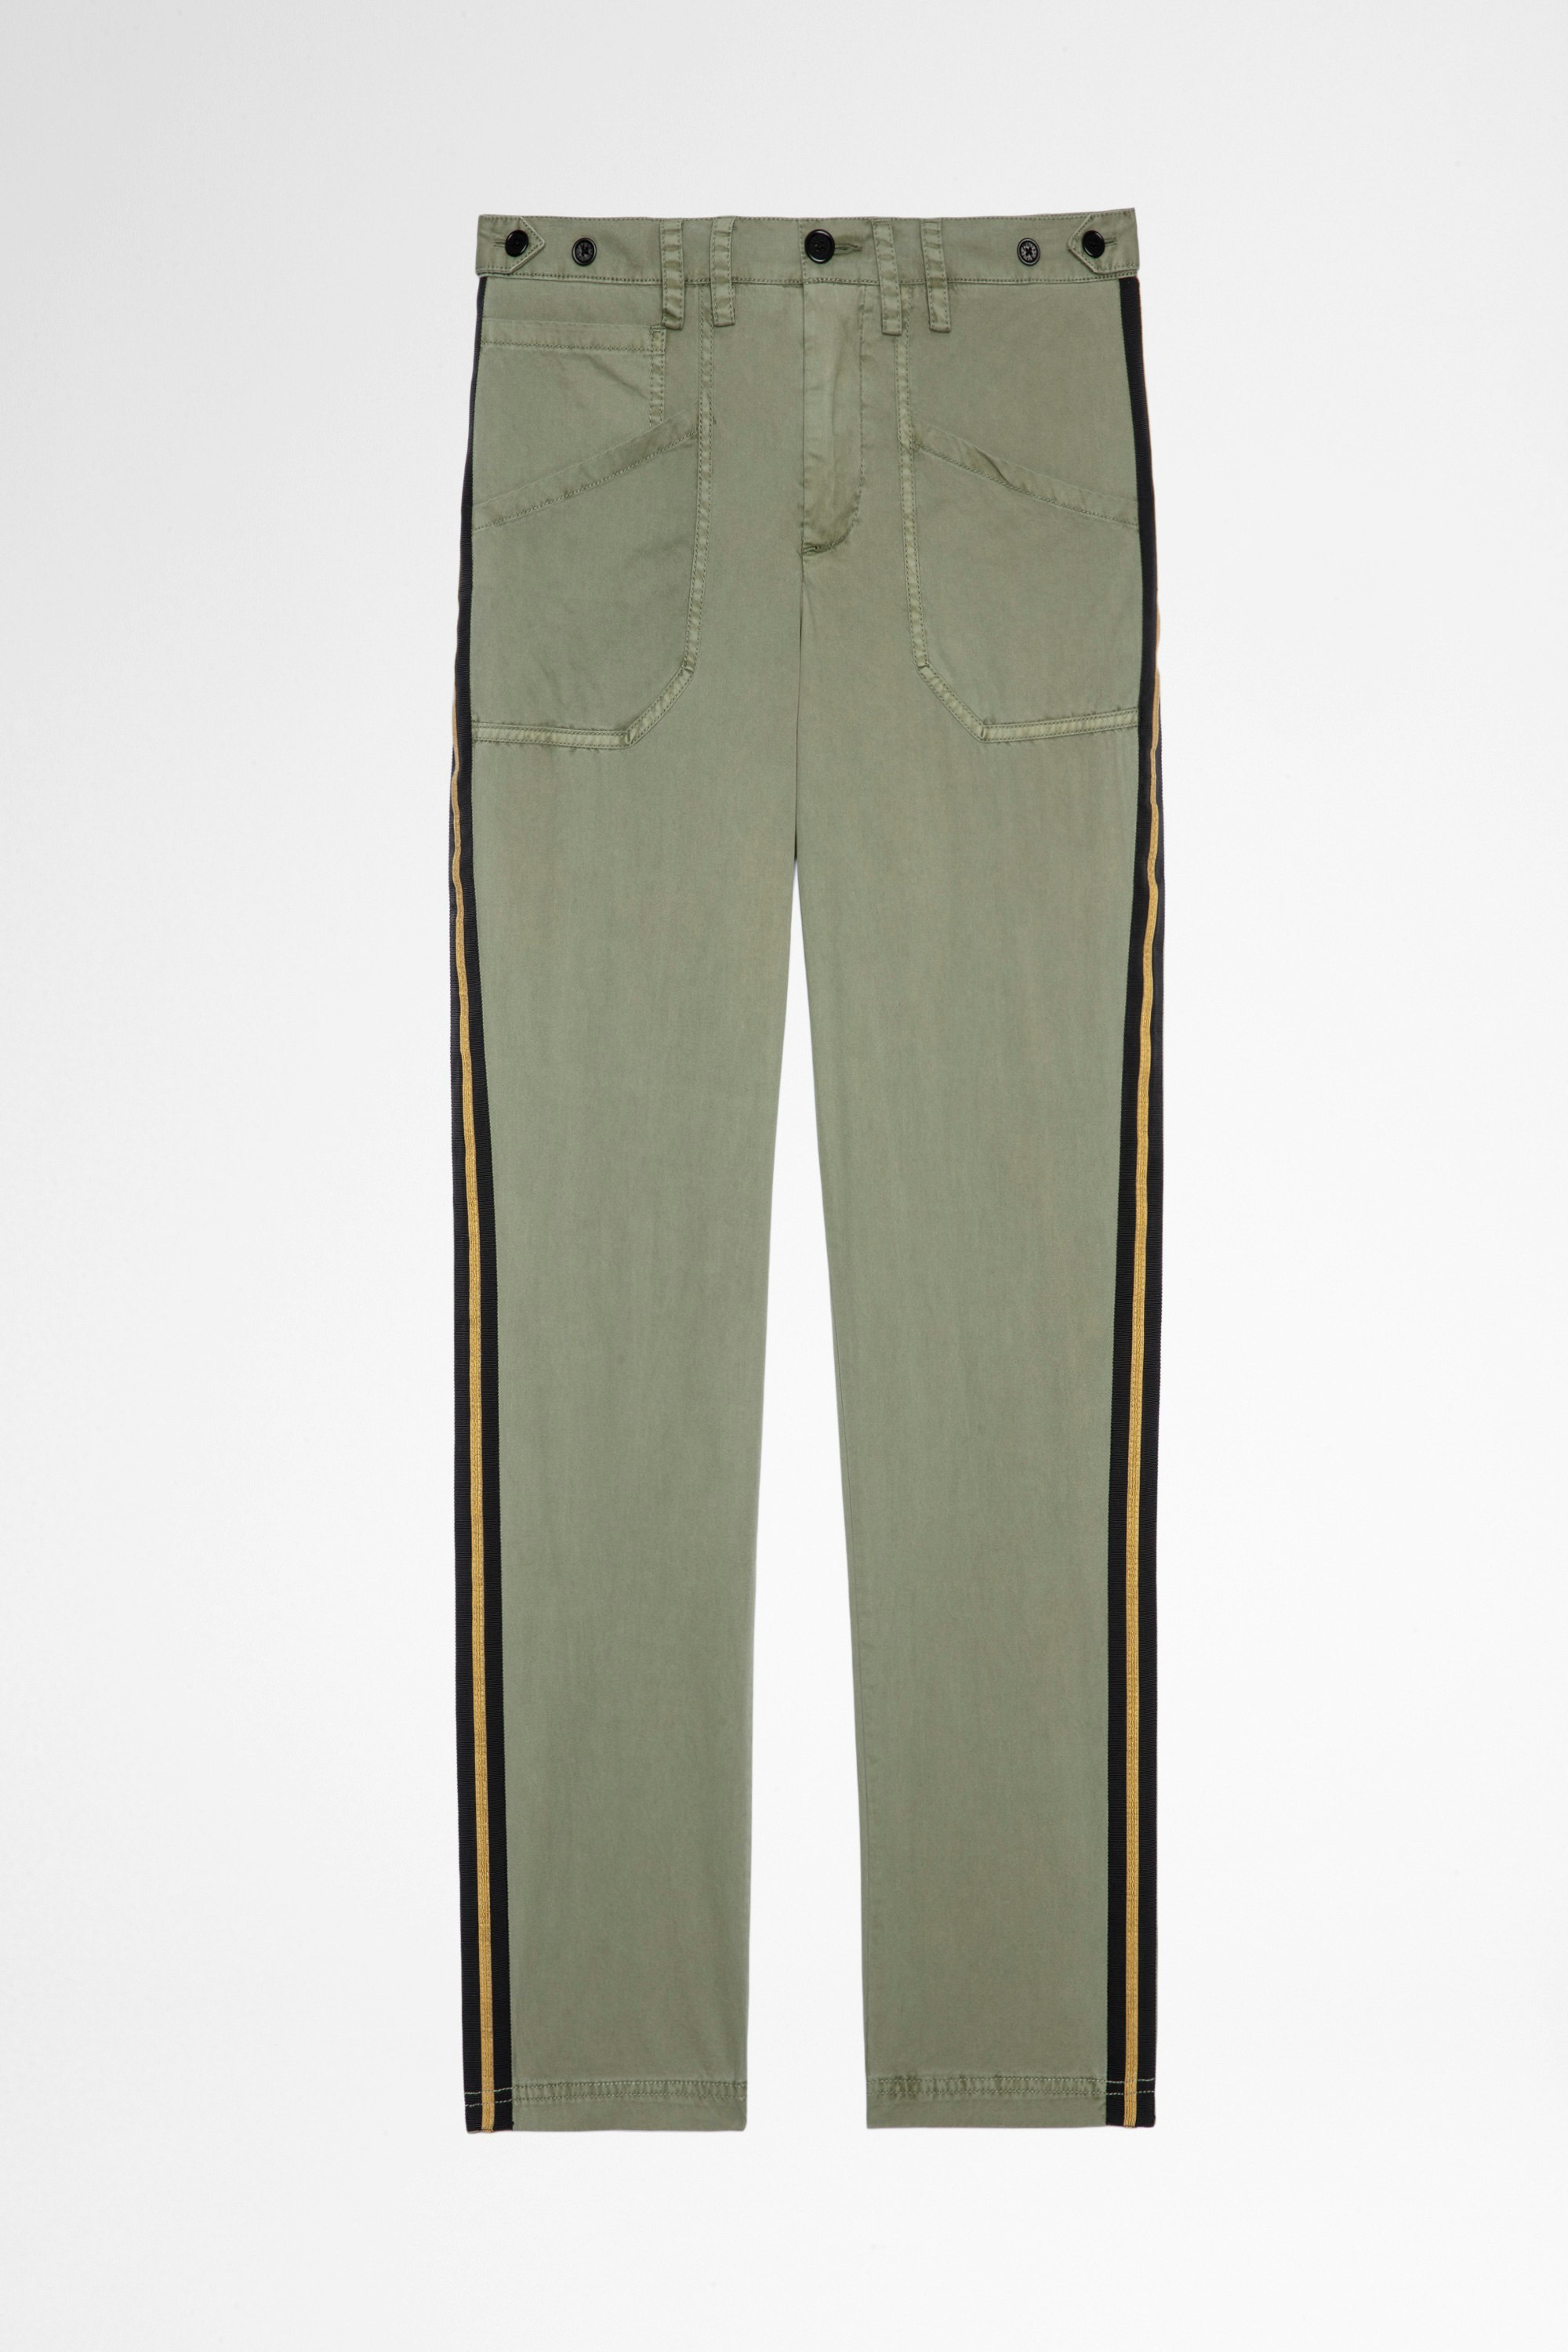 Pamela パンツ Women's cotton military trousers in khaki